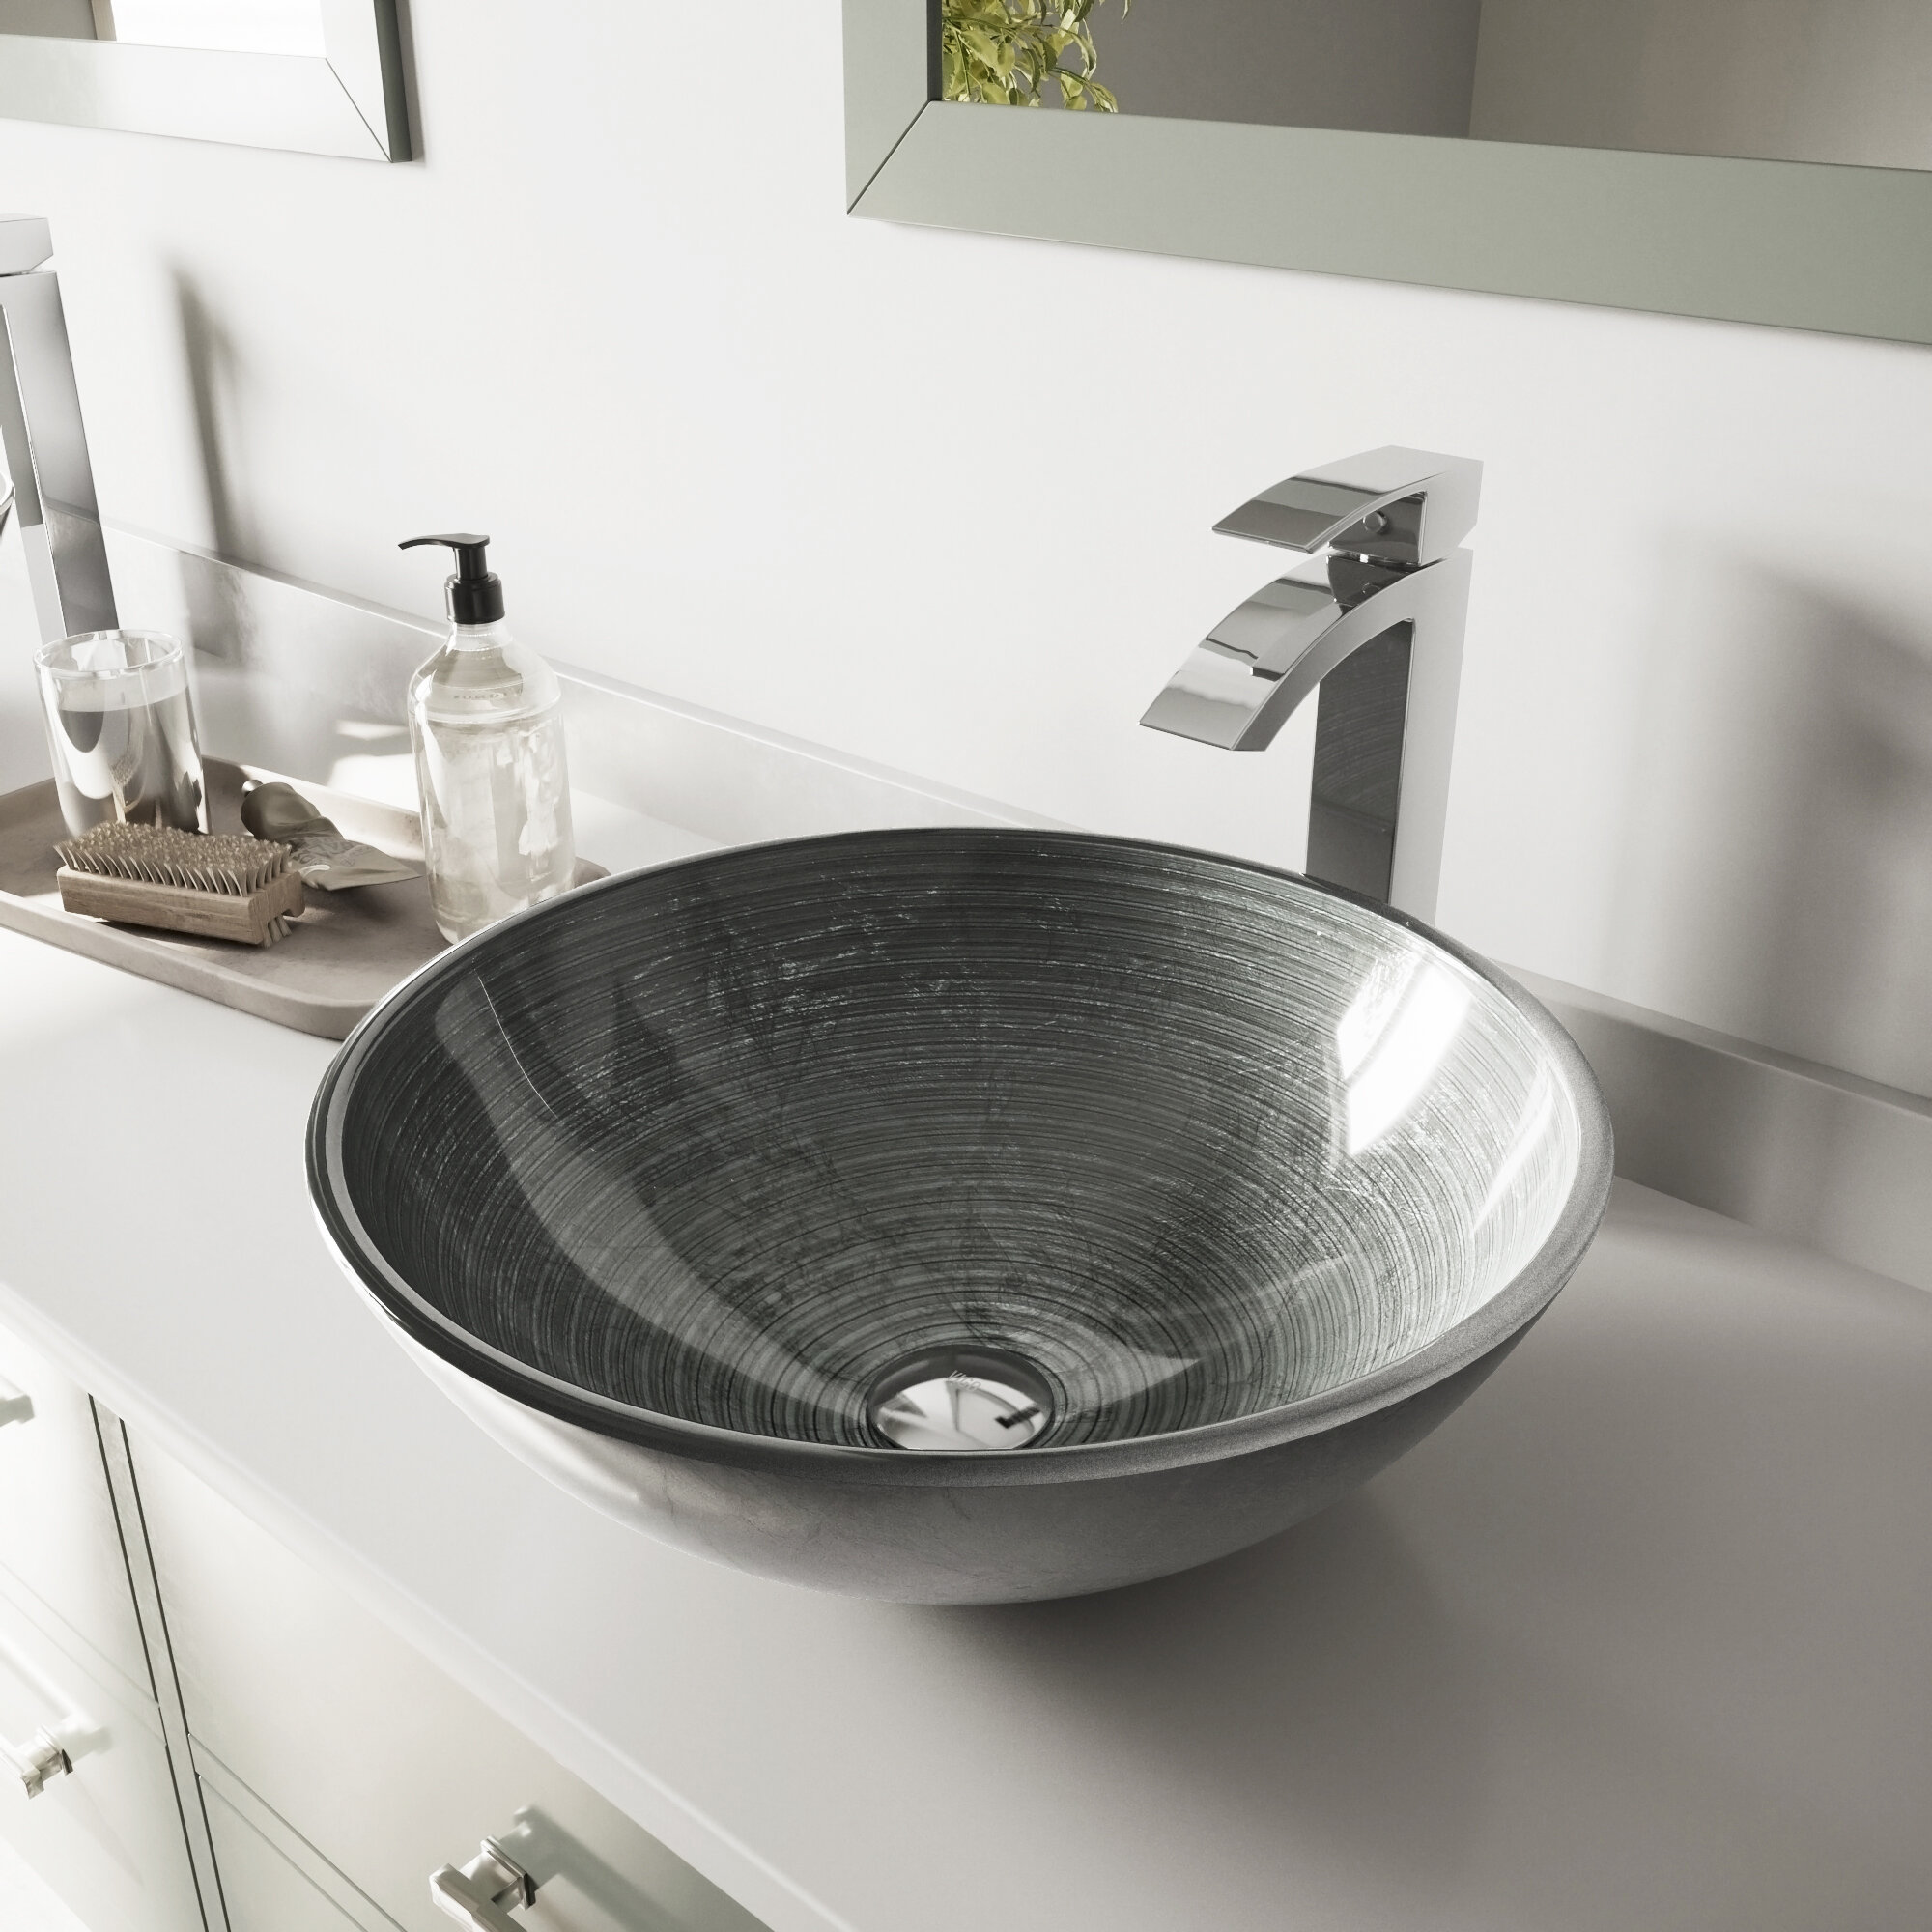 Vigo Simply Gray Tempered Glass Circular Vessel Bathroom Sink With Faucet Reviews Wayfair